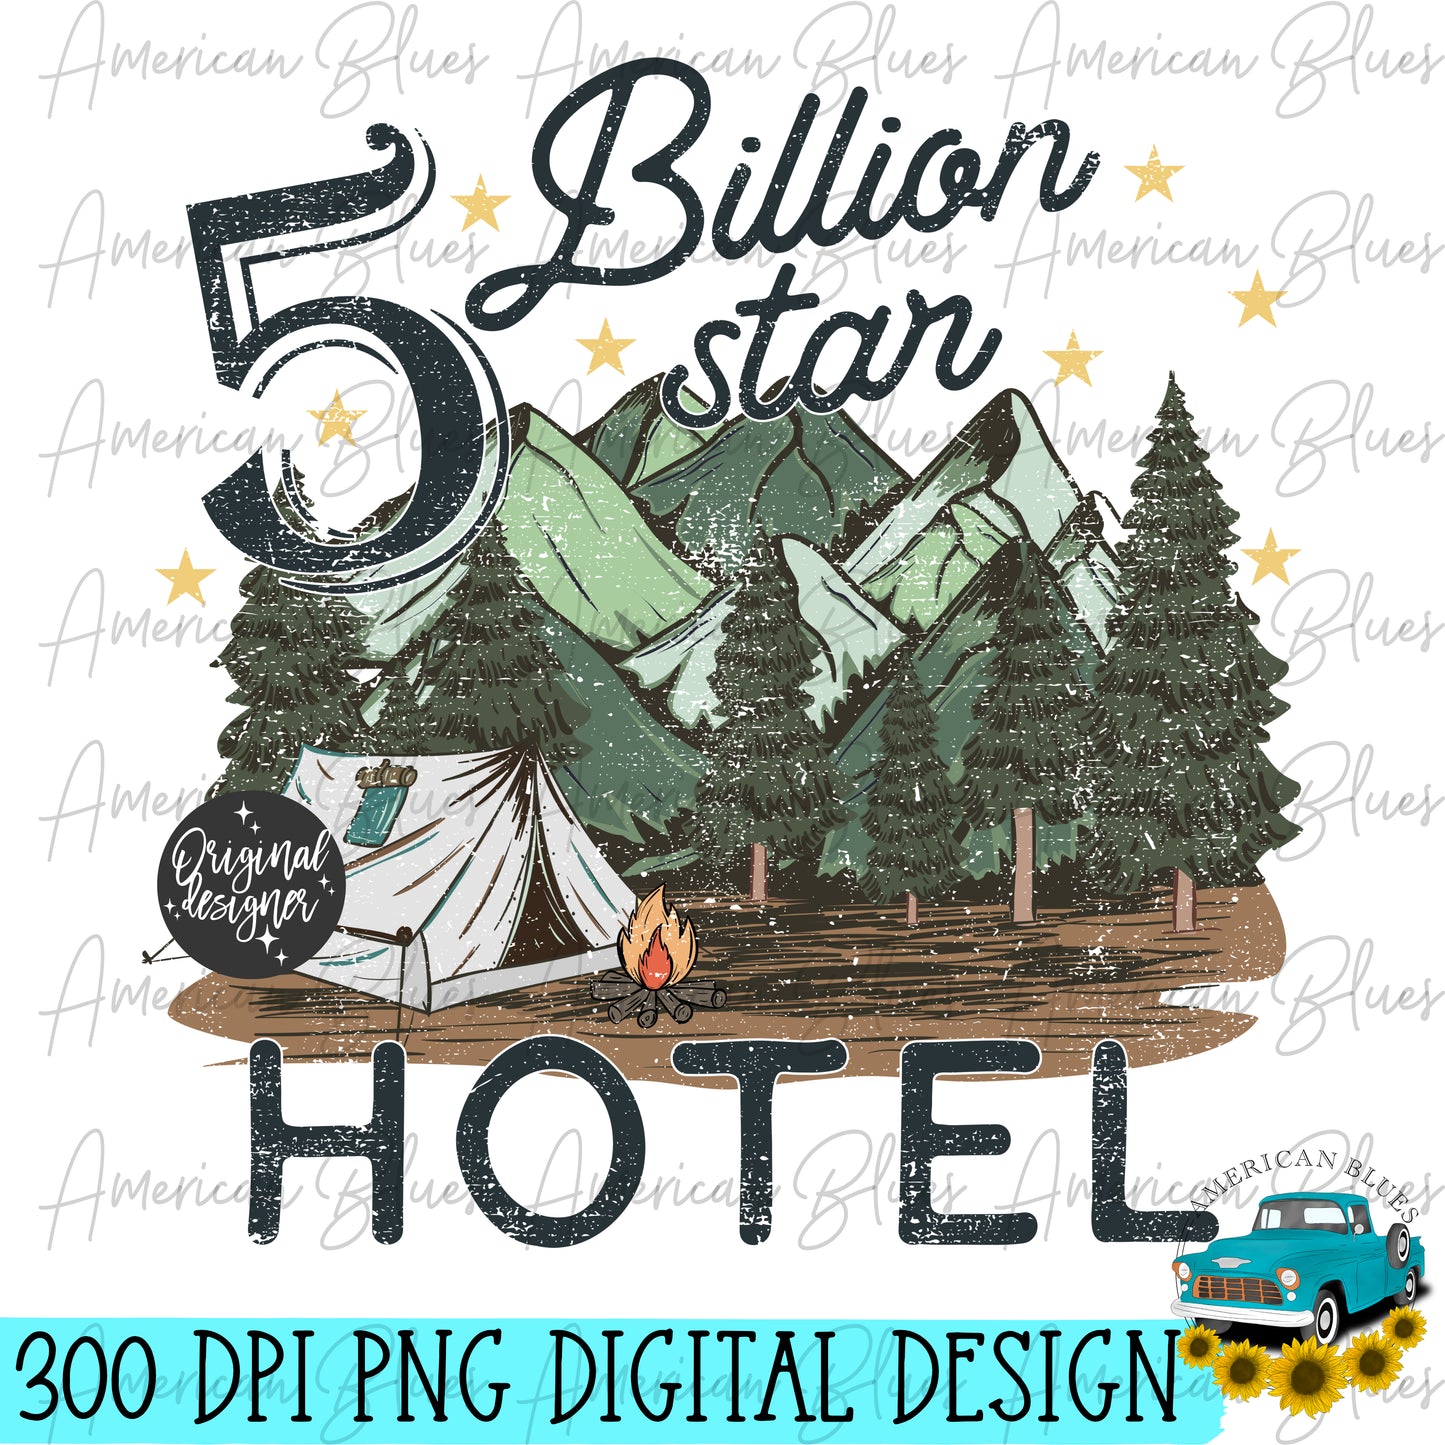 5 Billion star Hotel- distressed & regular version